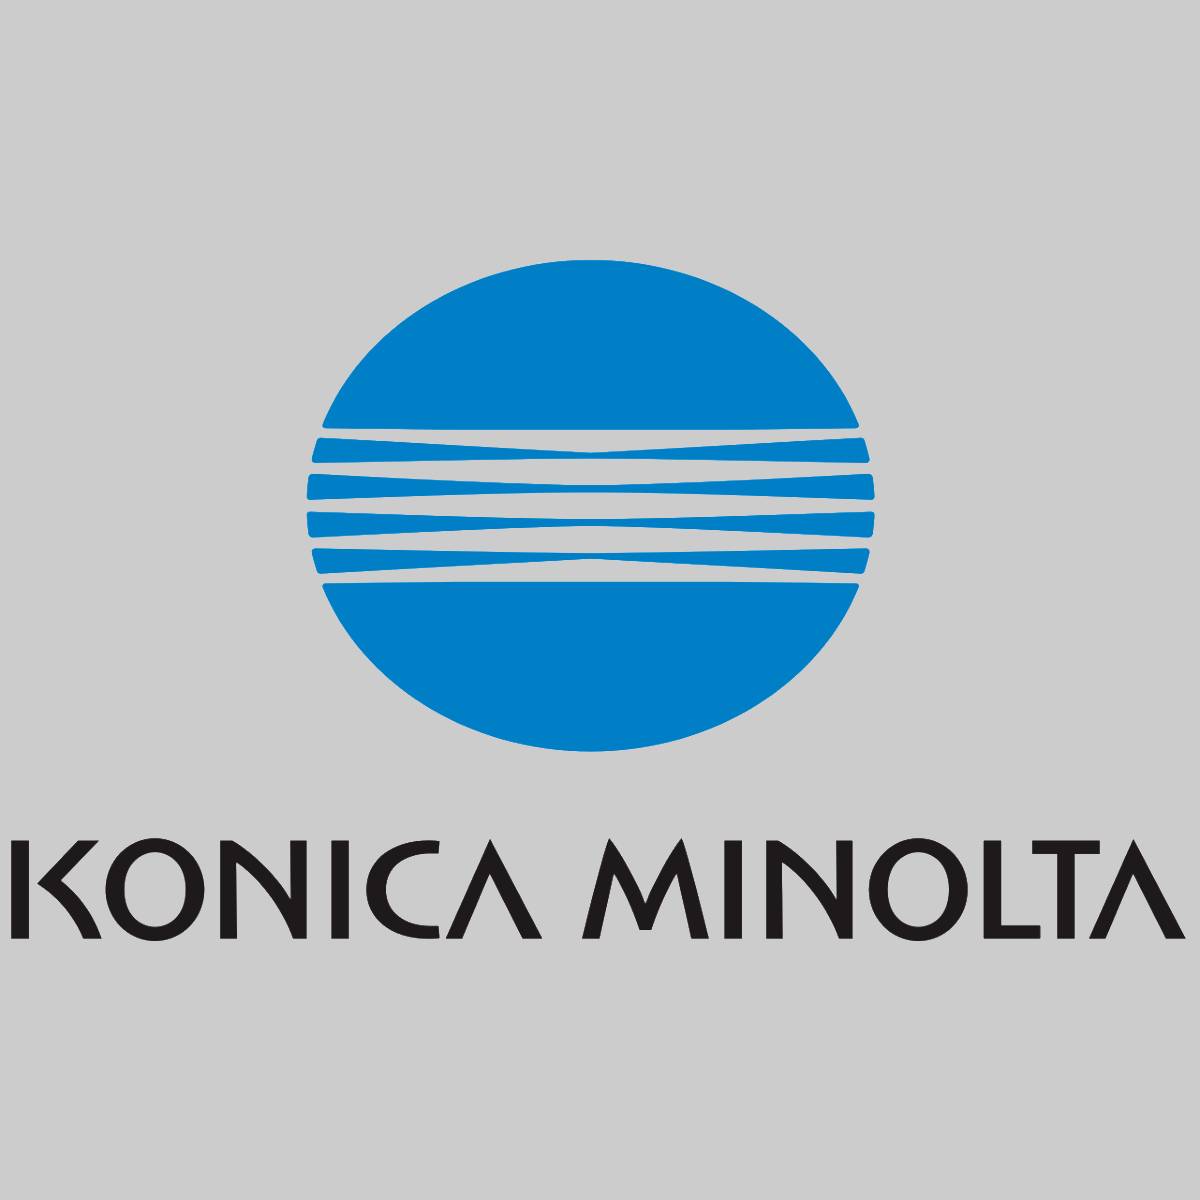 "Original Konica Minolta Fuser Unit A795R72933 für Bizhub 808 NEU OVP